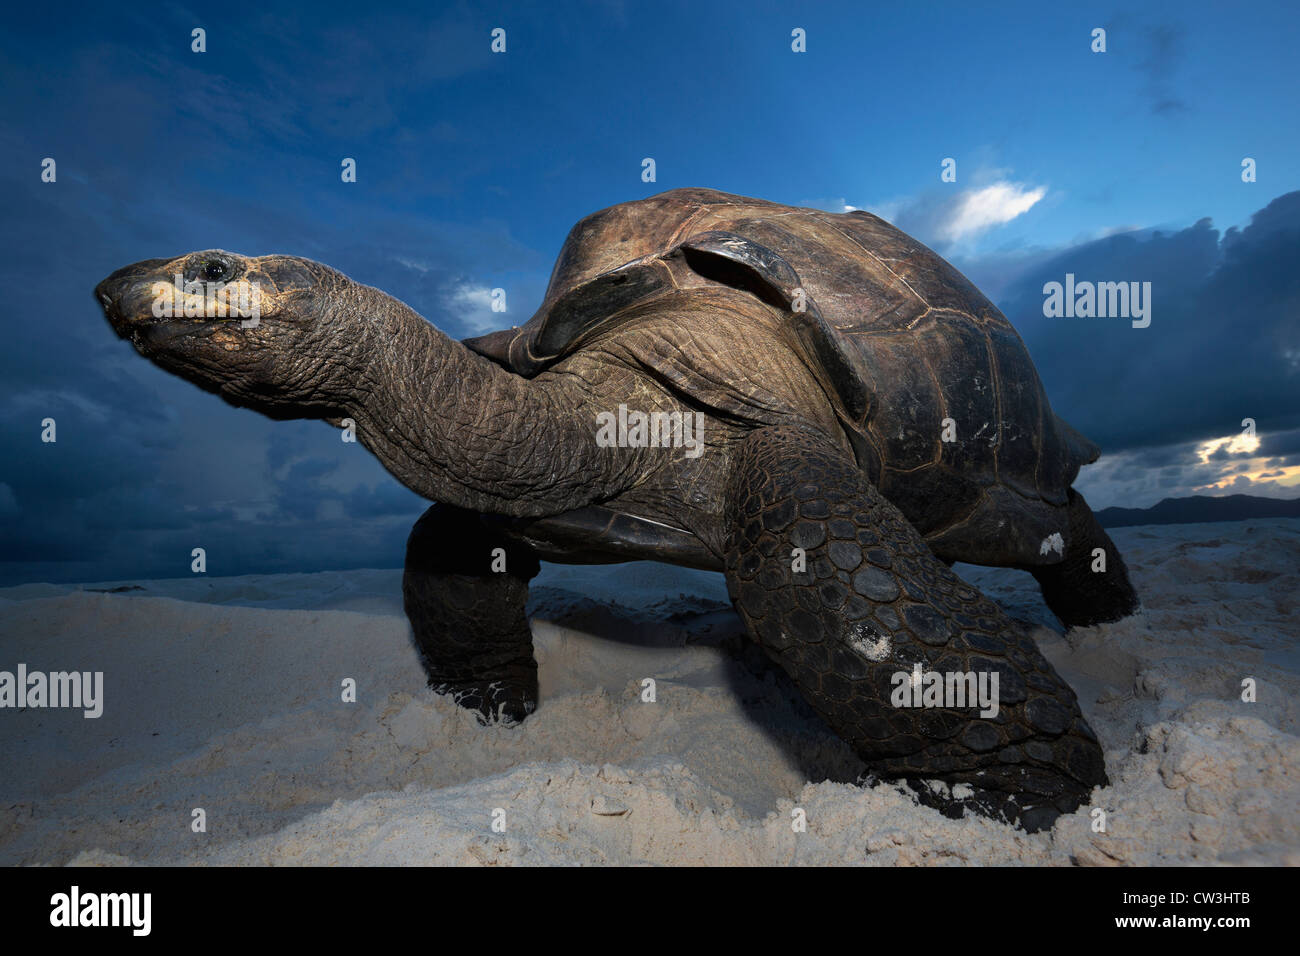 Giant tortoise (Geochelone gigantea). Vulnerable species. Dist. Seychelles islands. Stock Photo